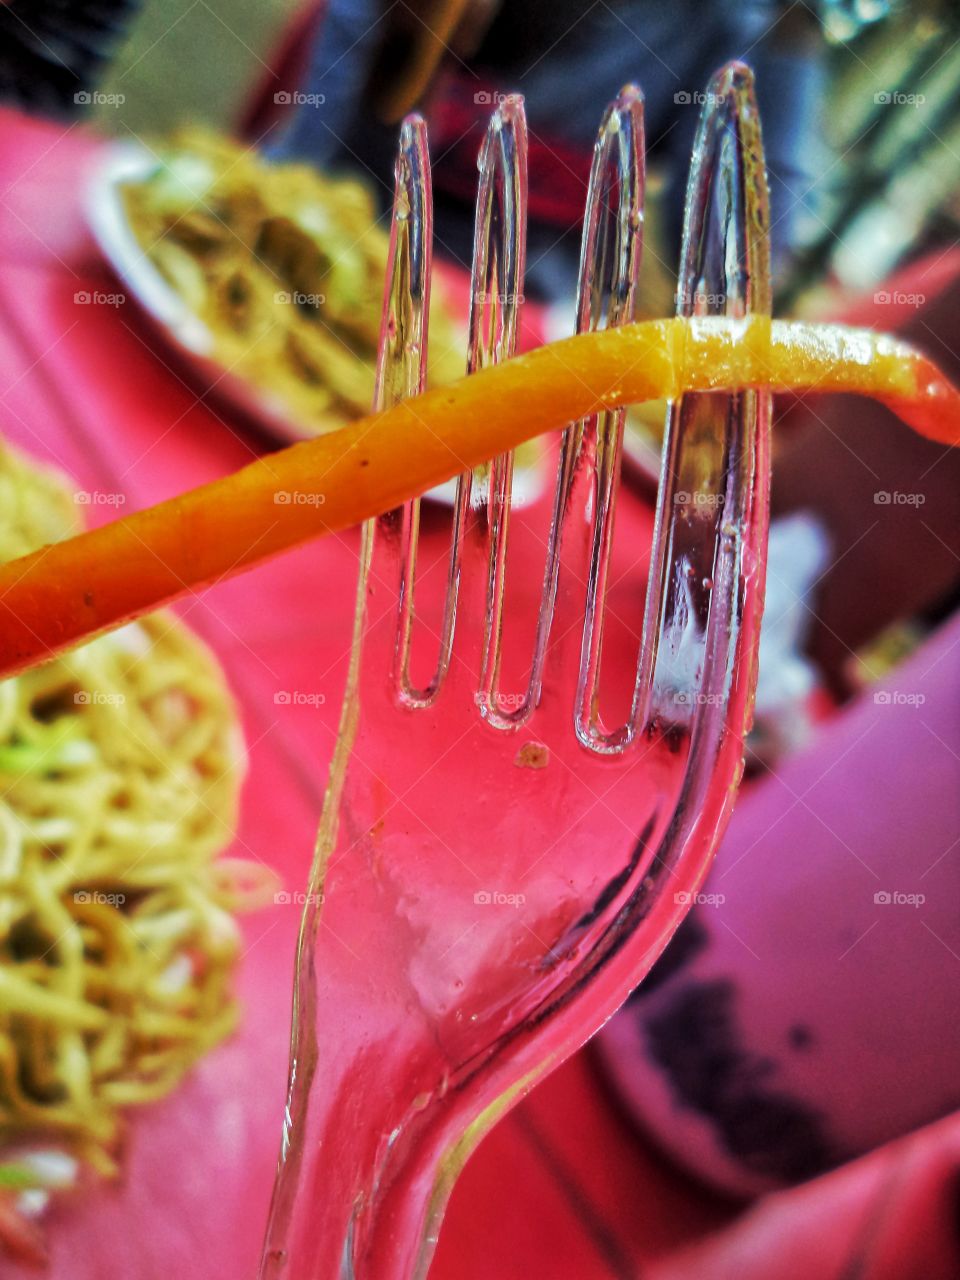 Plastic fork close up